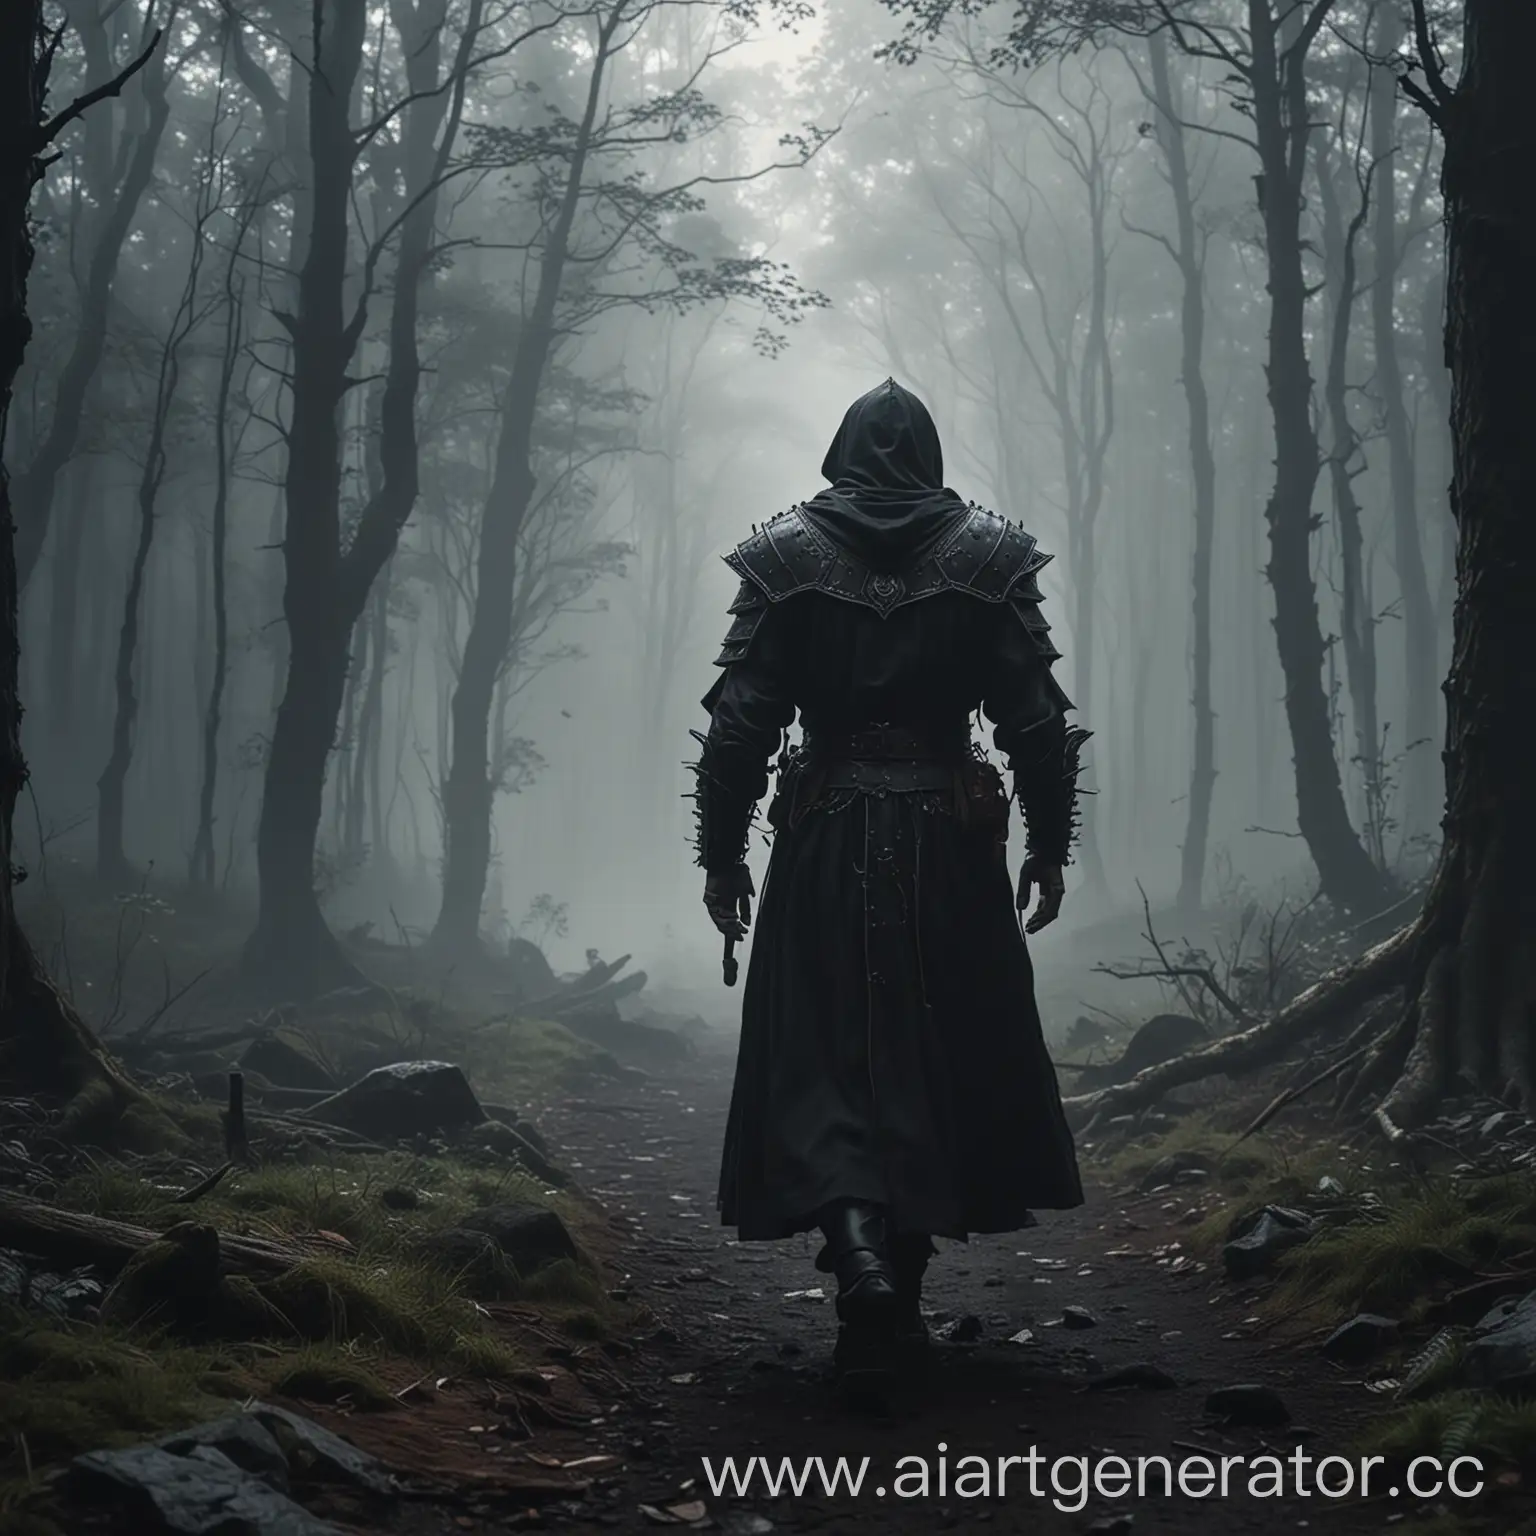 Mystical-Priest-in-Dark-Armor-Wanders-Through-Misty-Forest-4K-Quality-Image